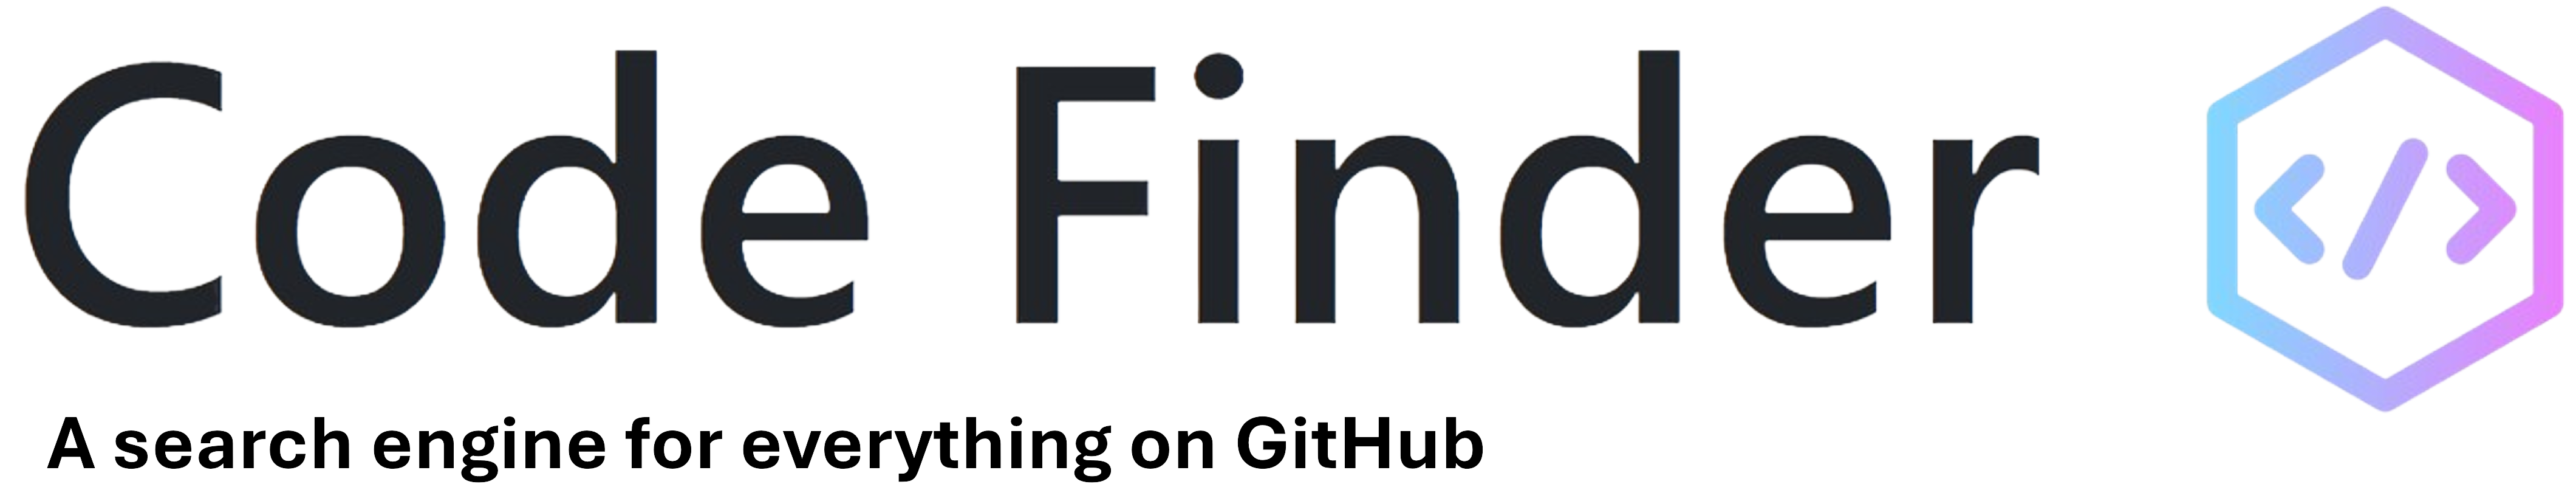 Code Finder Logo